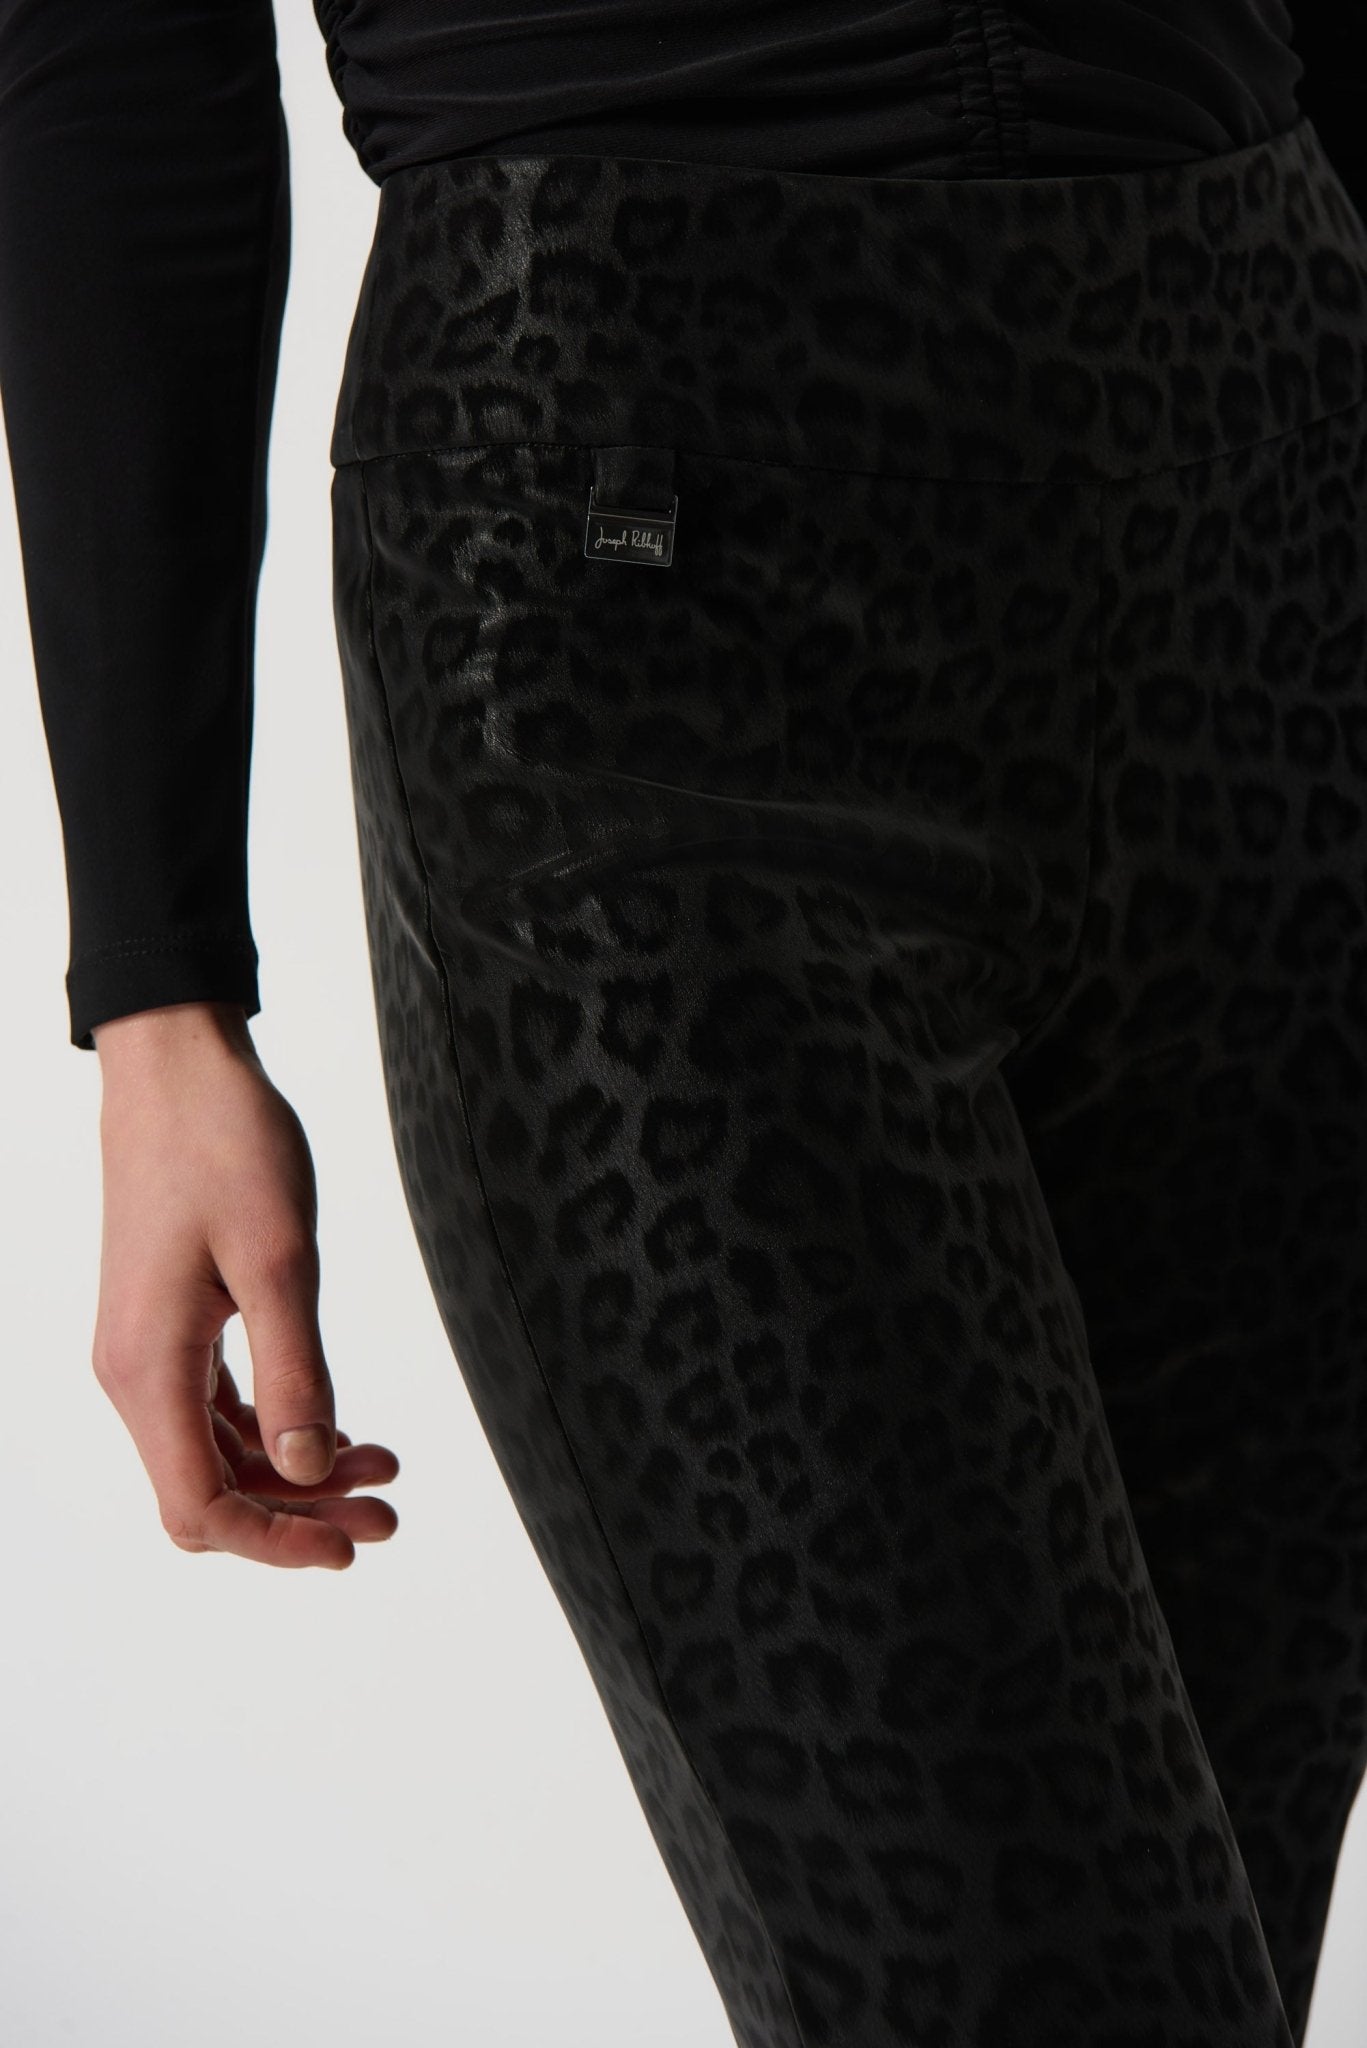 Shop Leatherette Animal Print Pull-On Pants Style 234900 | Black - Joseph Ribkoff